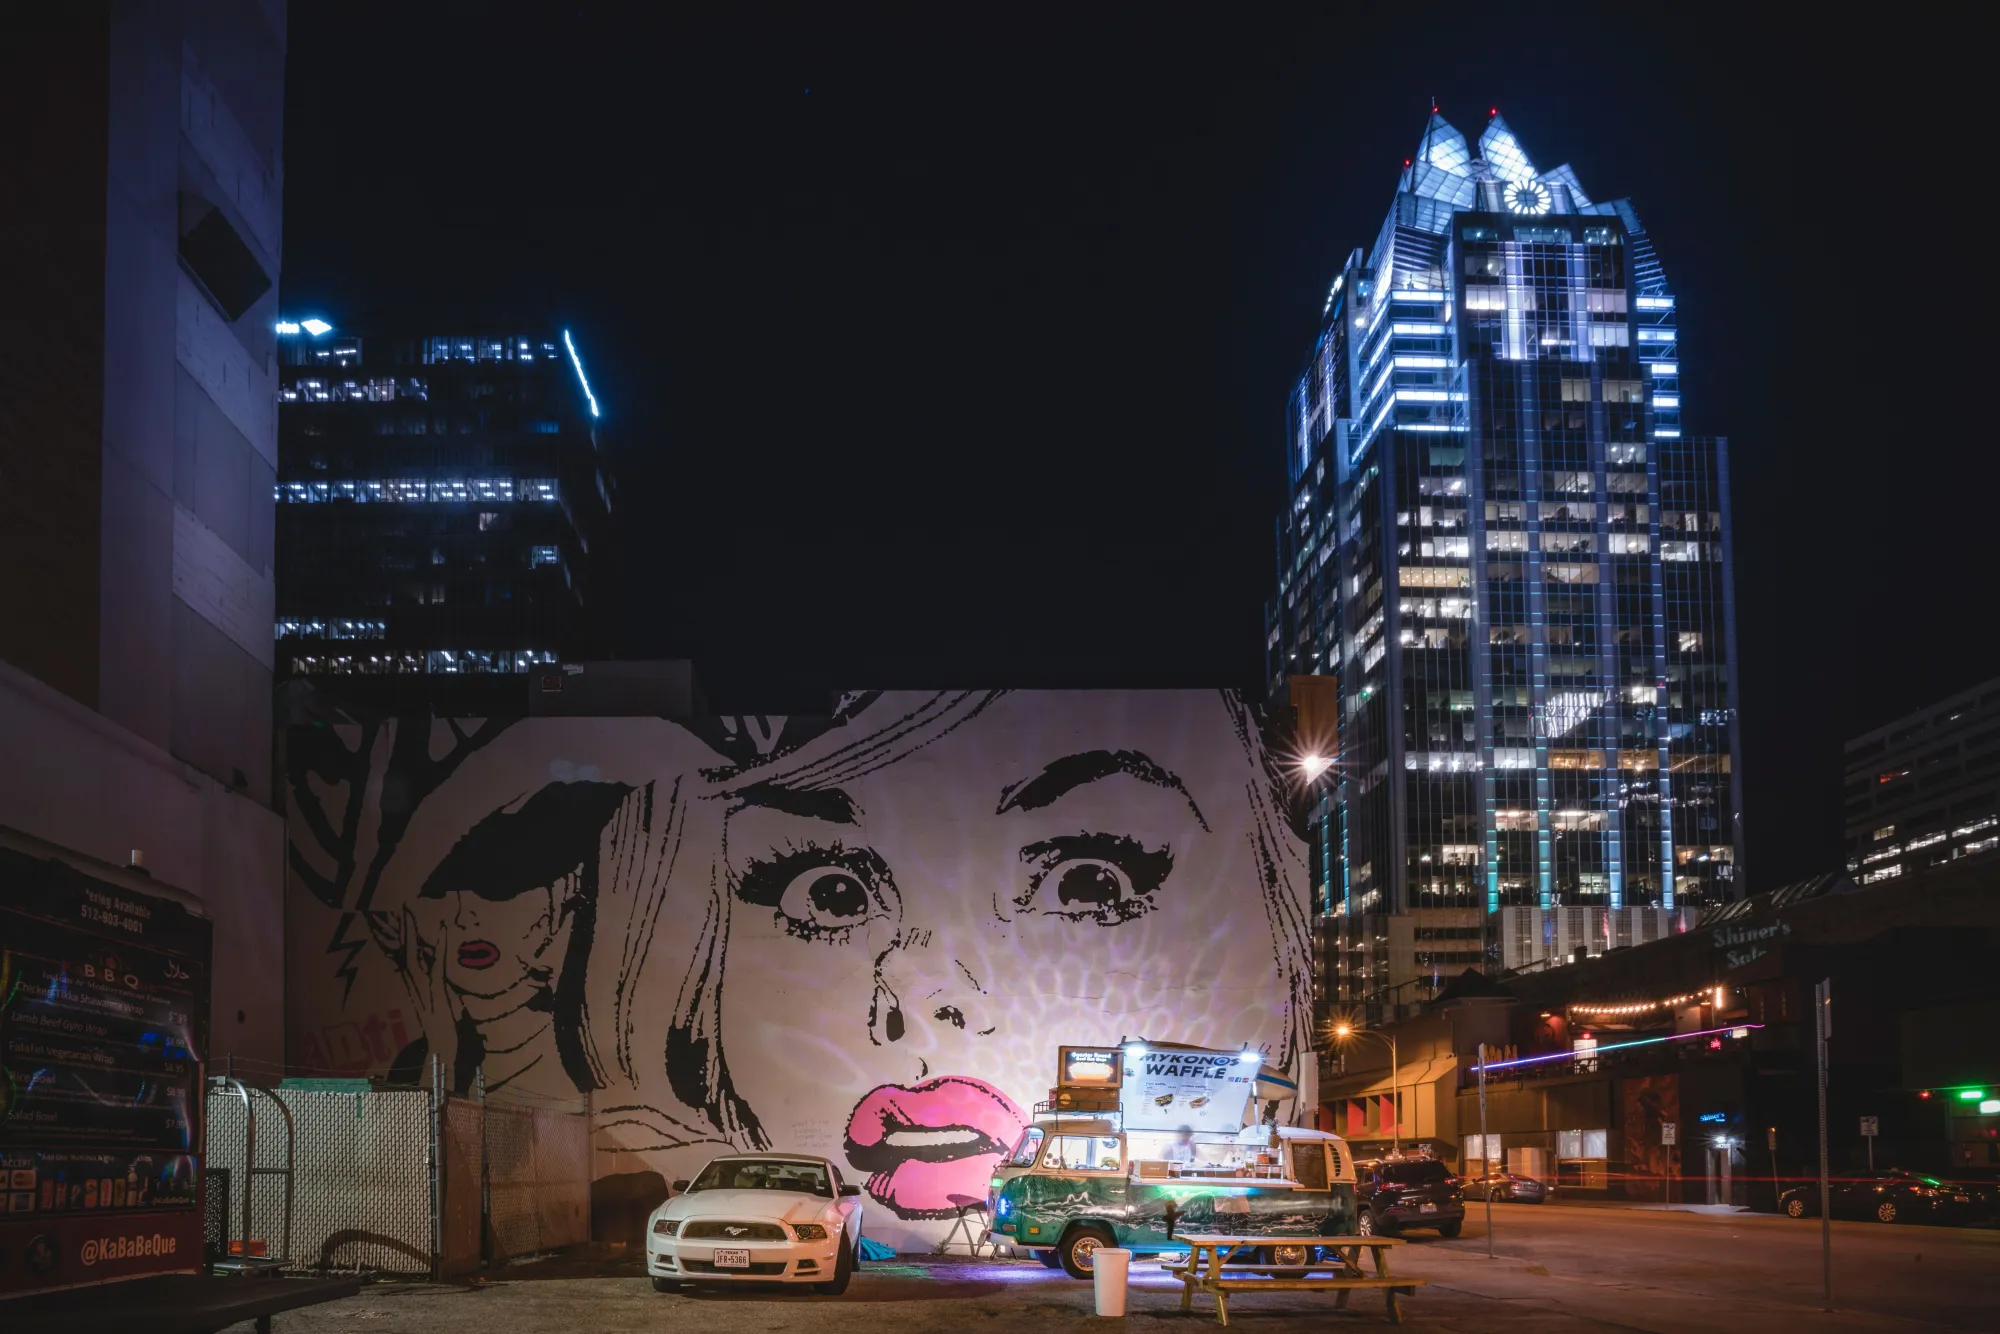 Graffiti in Austin, Texas